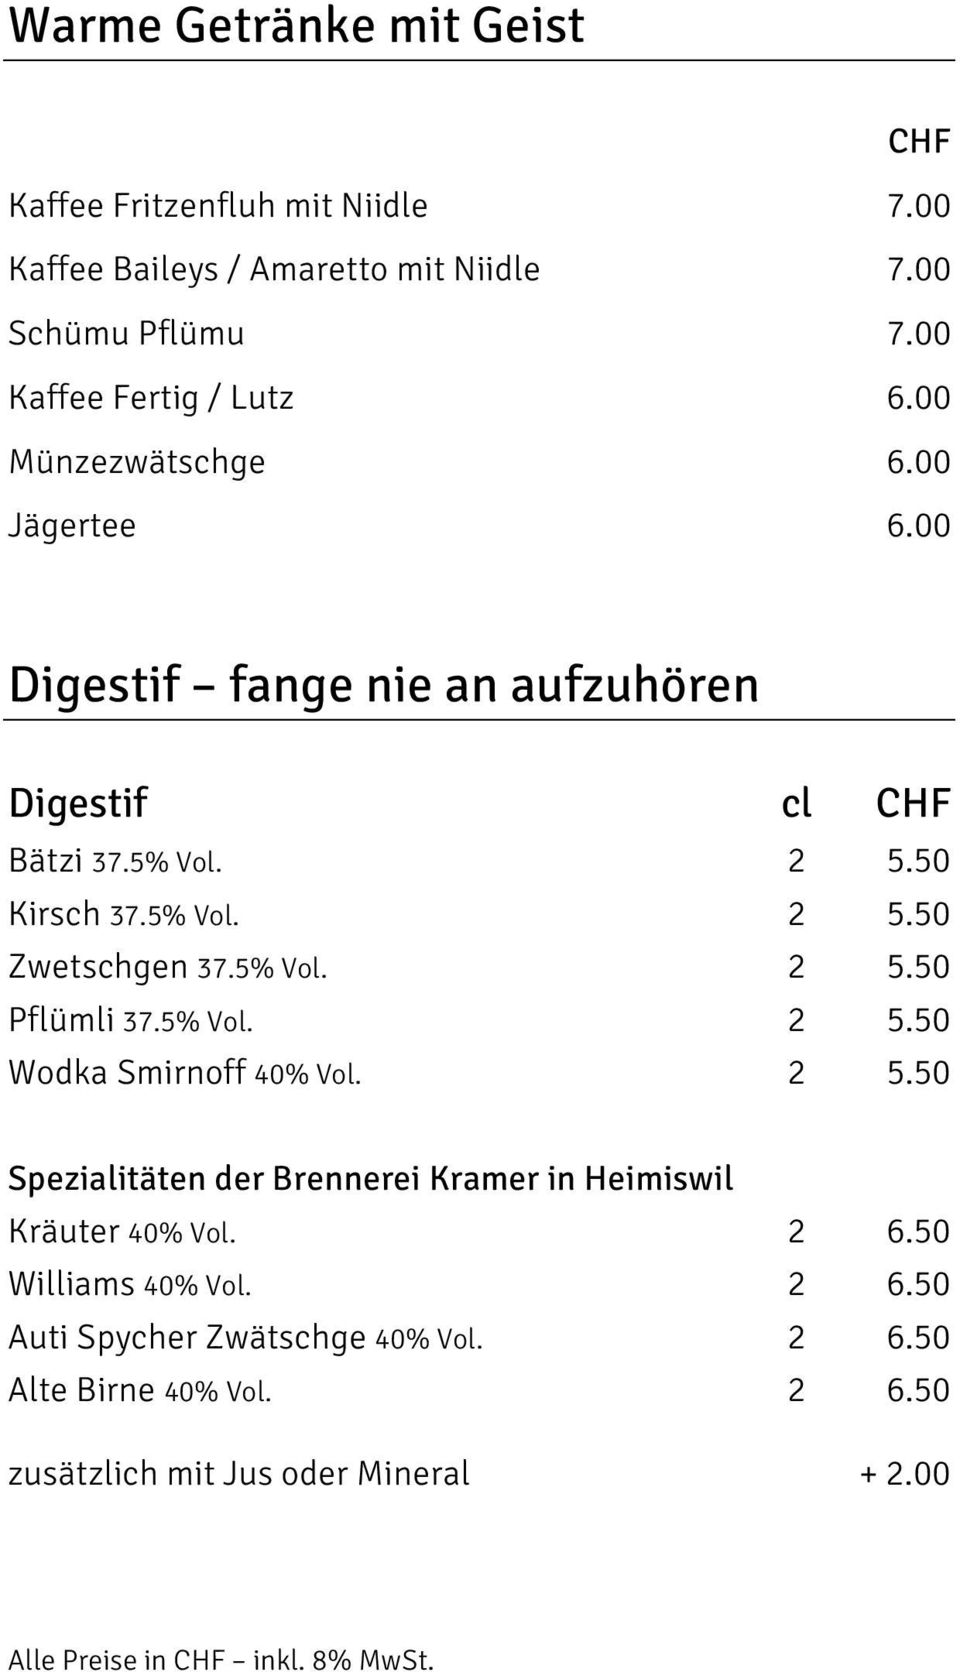 Kirsch 37.5% Vol. 2 5. Zwetschgen 37.5% Vol. 2 5. Pflümli 37.5% Vol. 2 5. Wodka Smirnoff 40% Vol. 2 5. Spezialitäten der Brennerei Kramer in Heimiswil Kräuter 40% Vol.